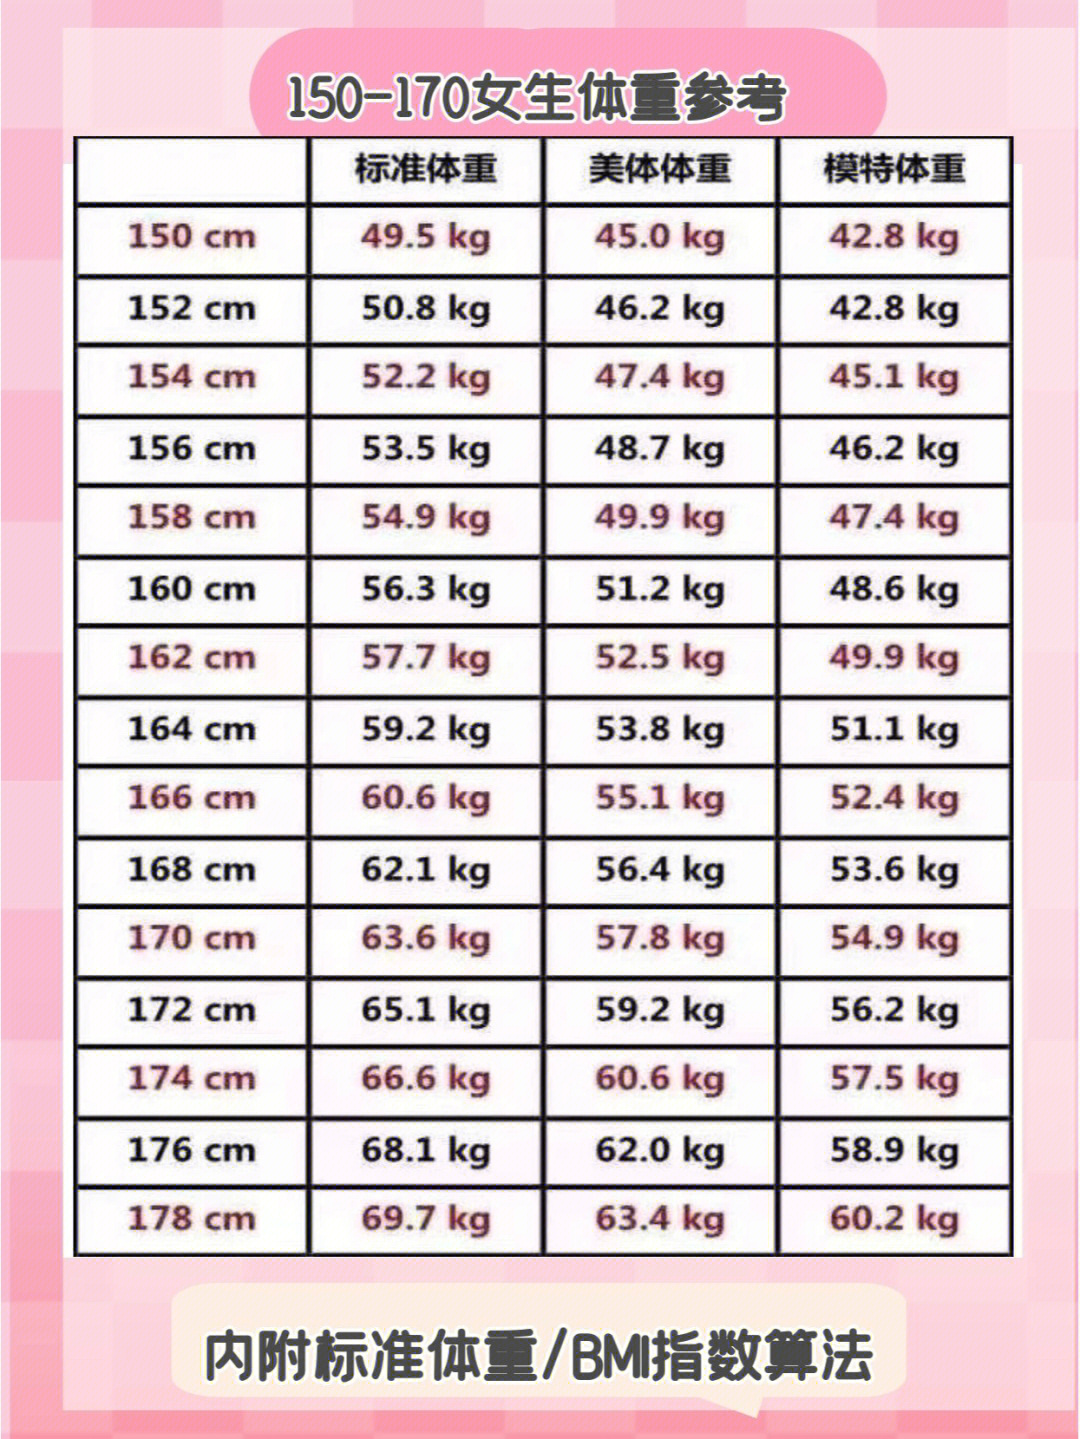 bmi标准体重对照表图片